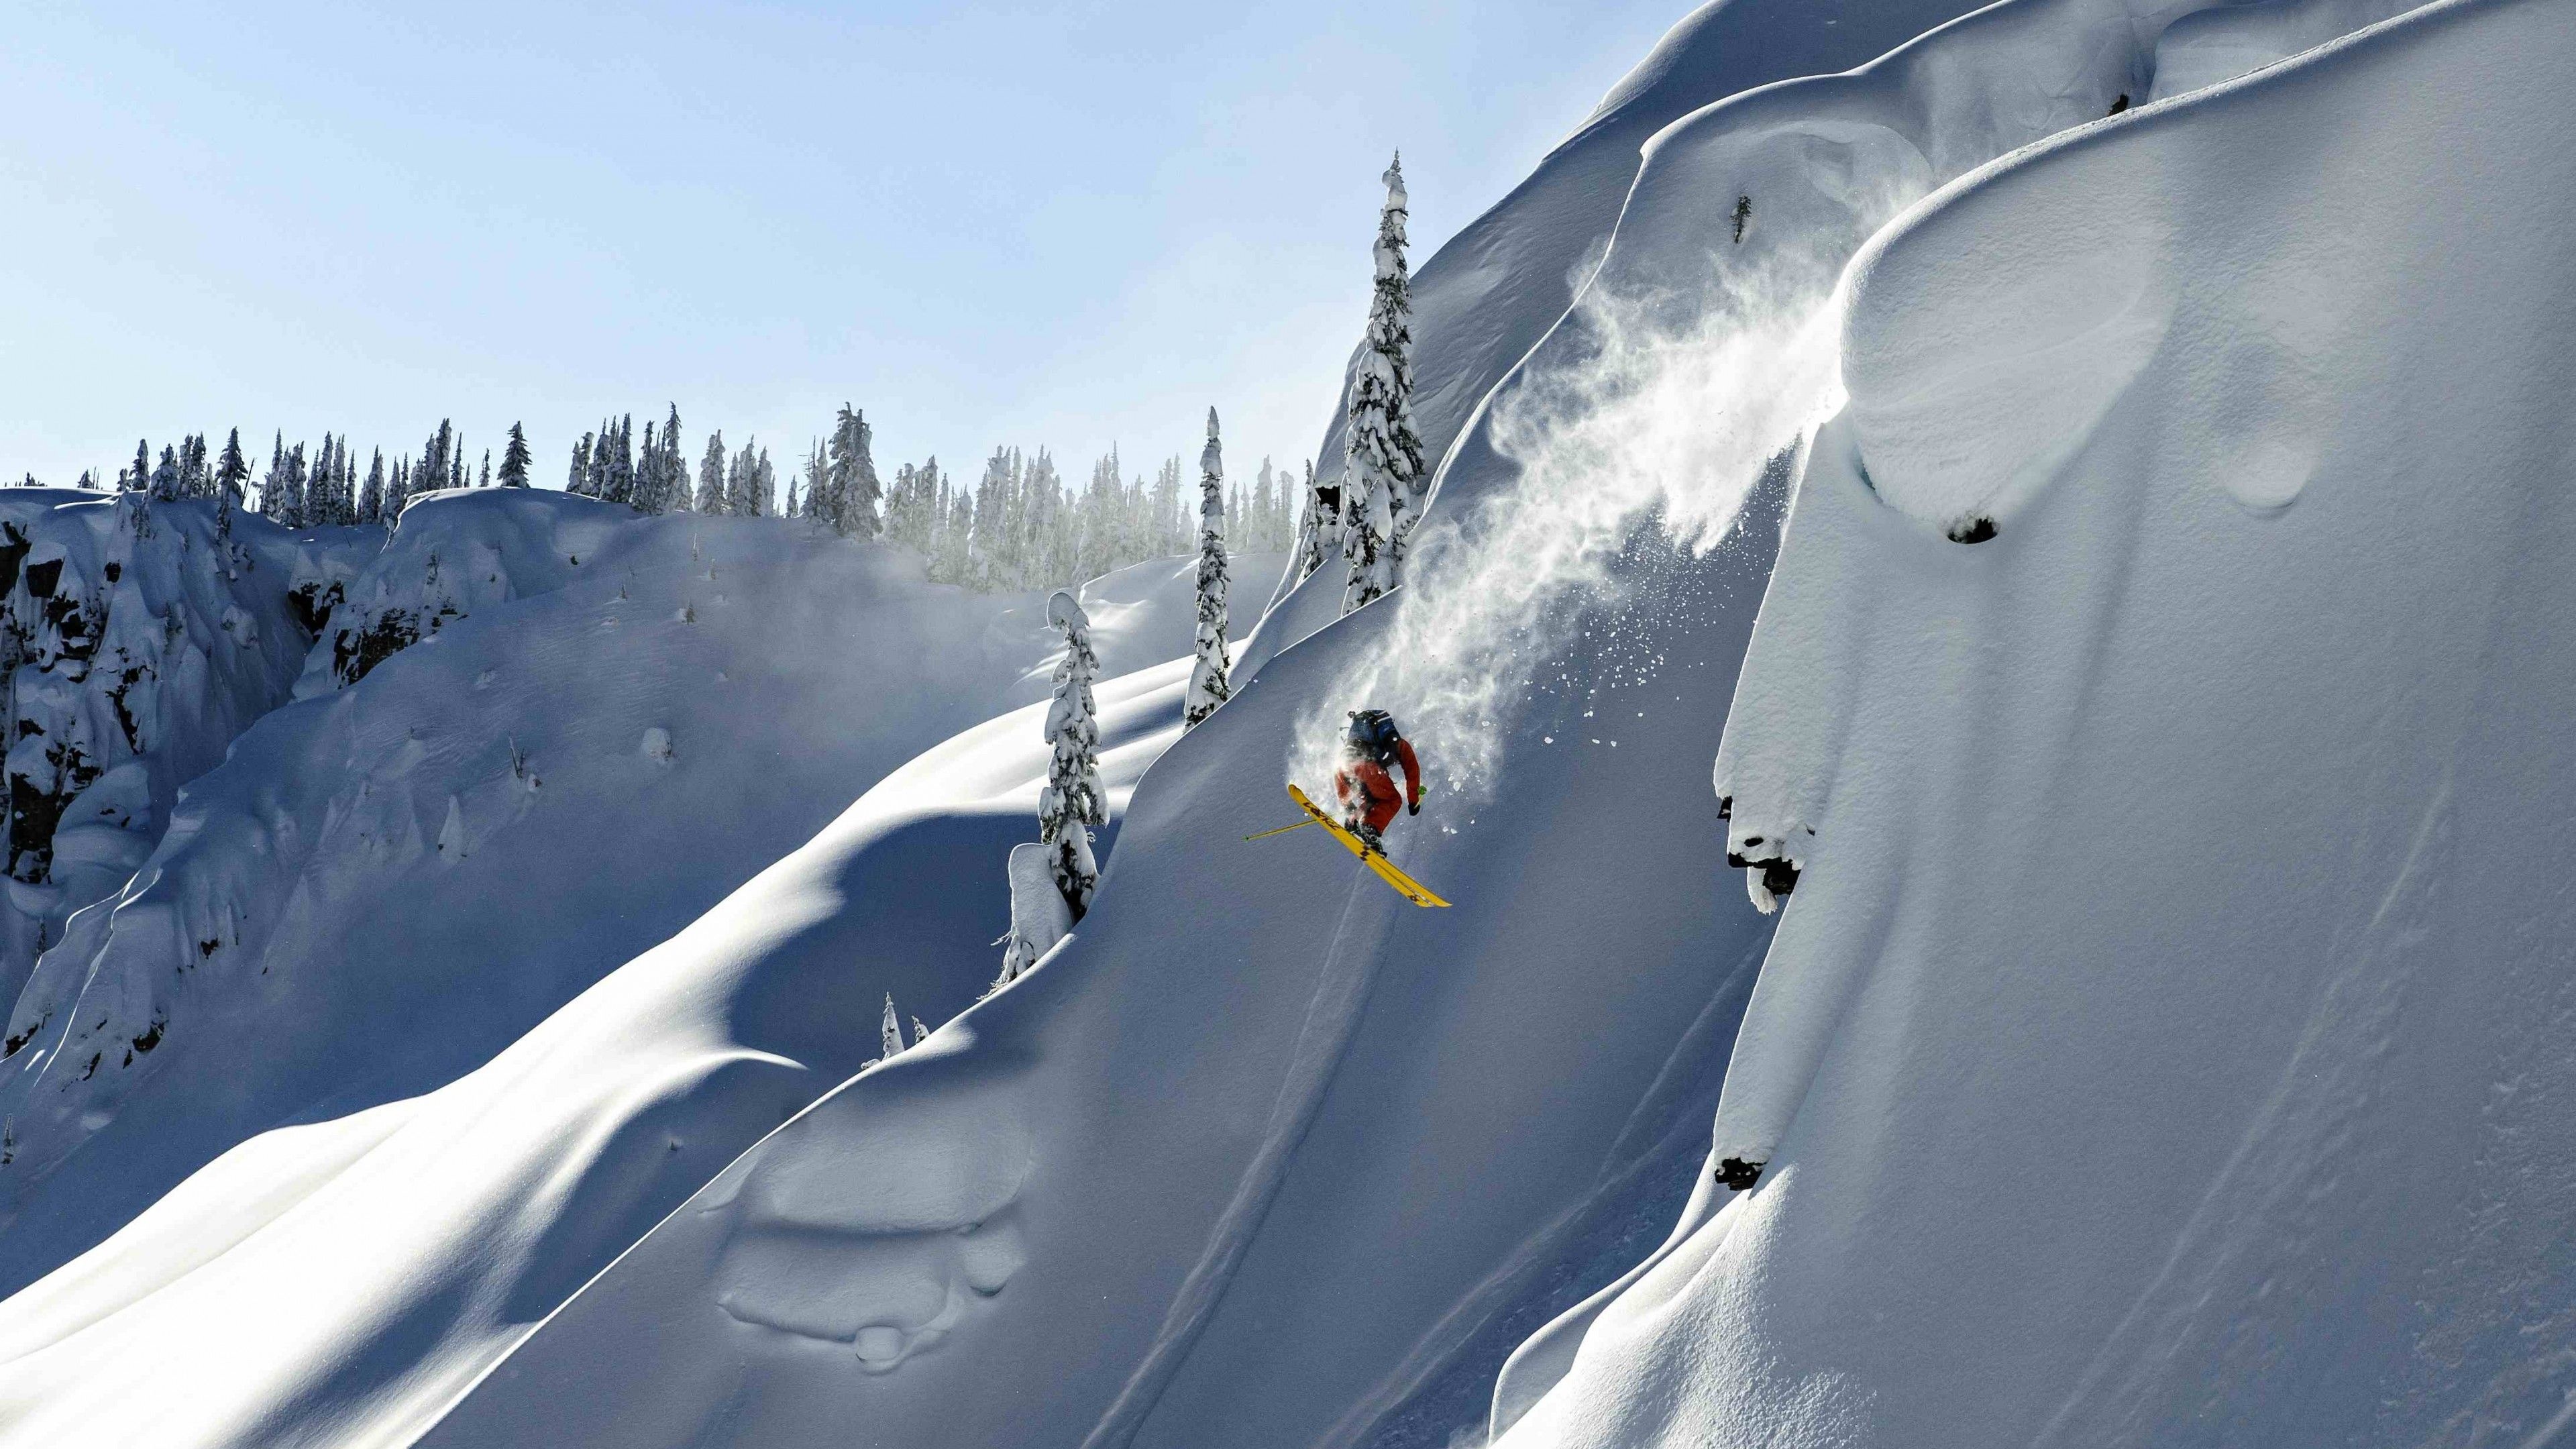 Skiing: Heliskiing, Extreme sports, Downhill, Mountain, Winter activity. 3840x2160 4K Background.